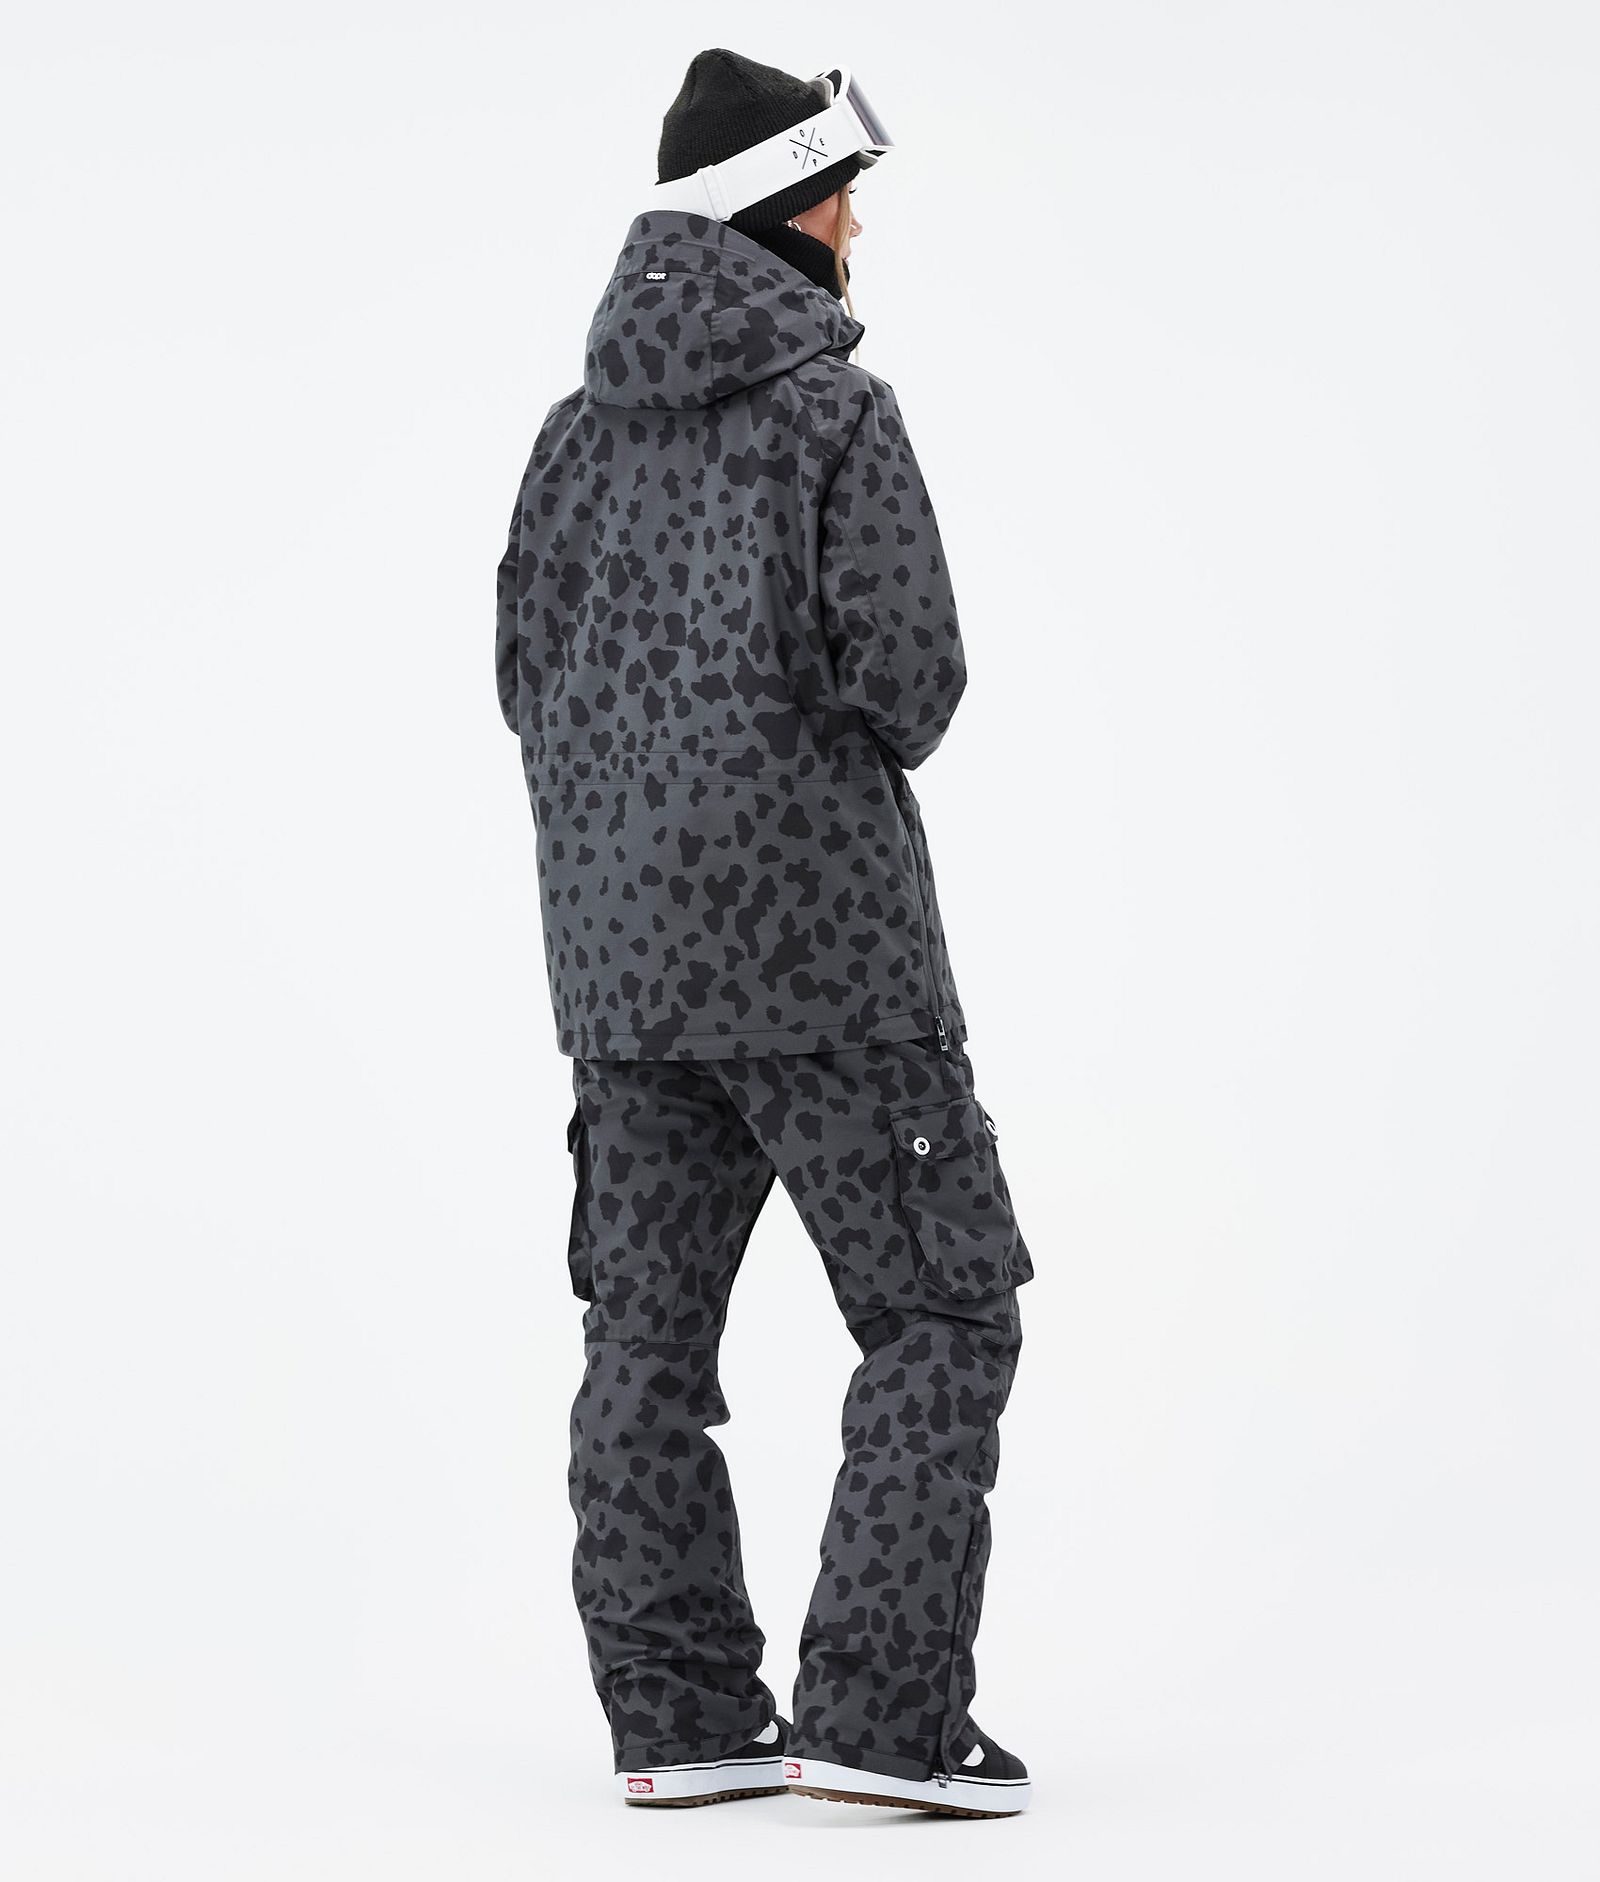 Annok W Snowboard Outfit Women Dots Phantom